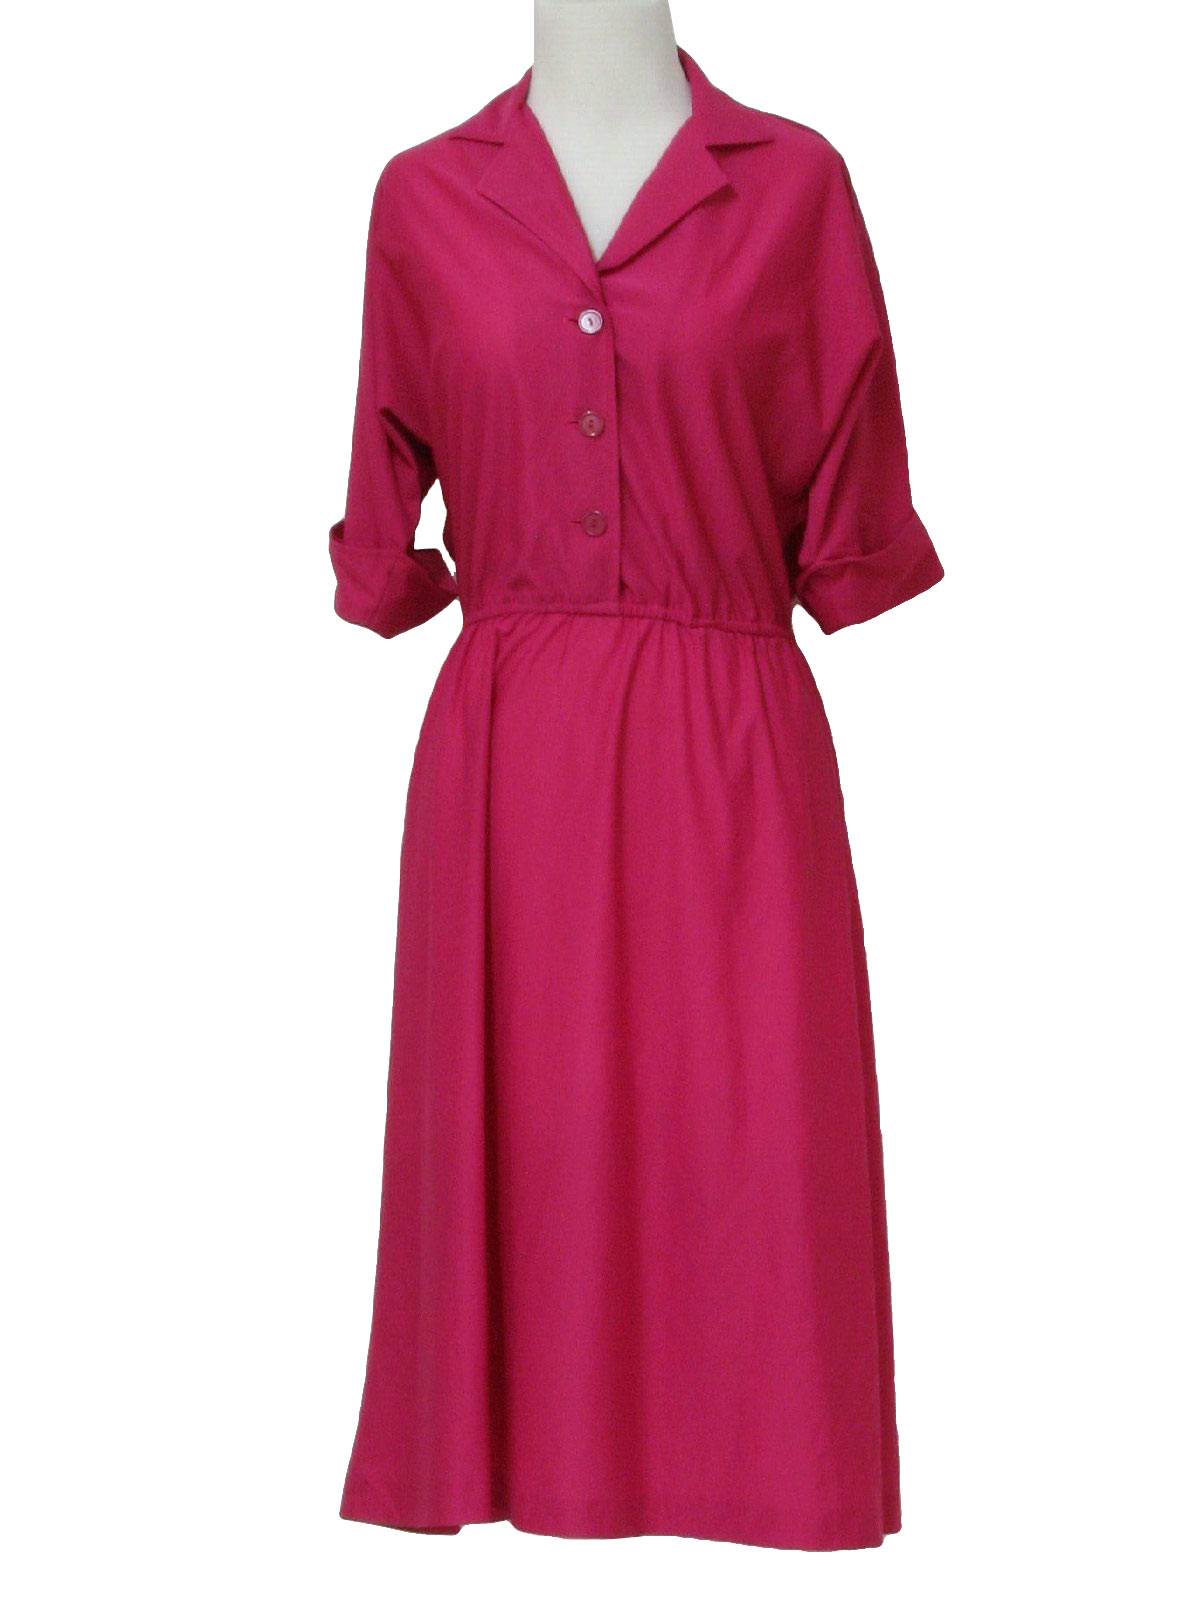 1950's Retro Dress: 80s (50s inspired) -JJ Dean- Womens hot fuchsia ...